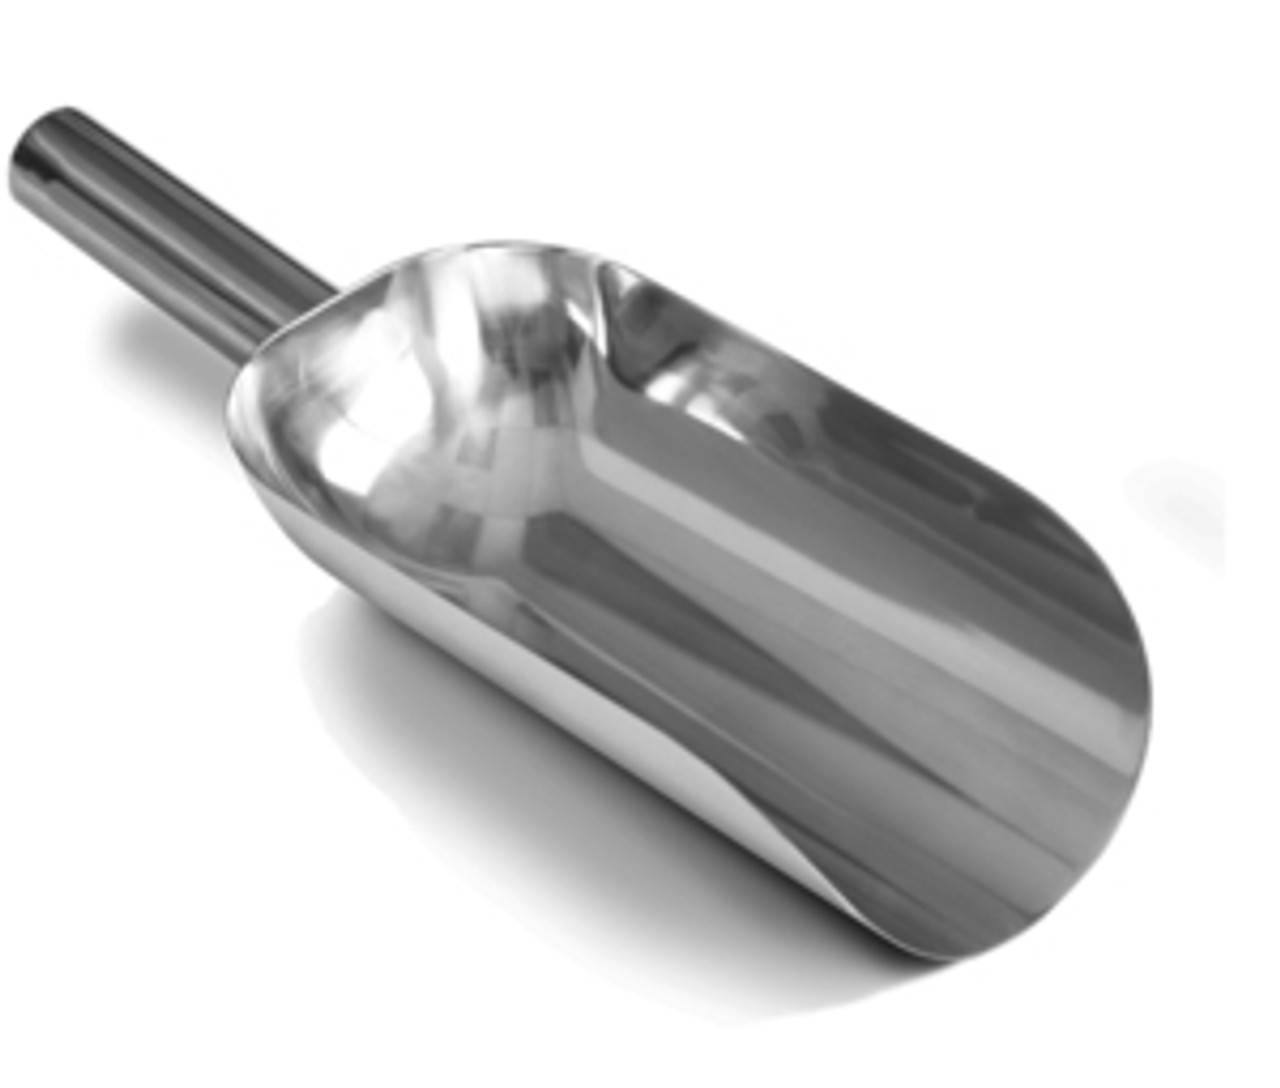 FoodScoop - hand scoop for the food industry Metal scoops